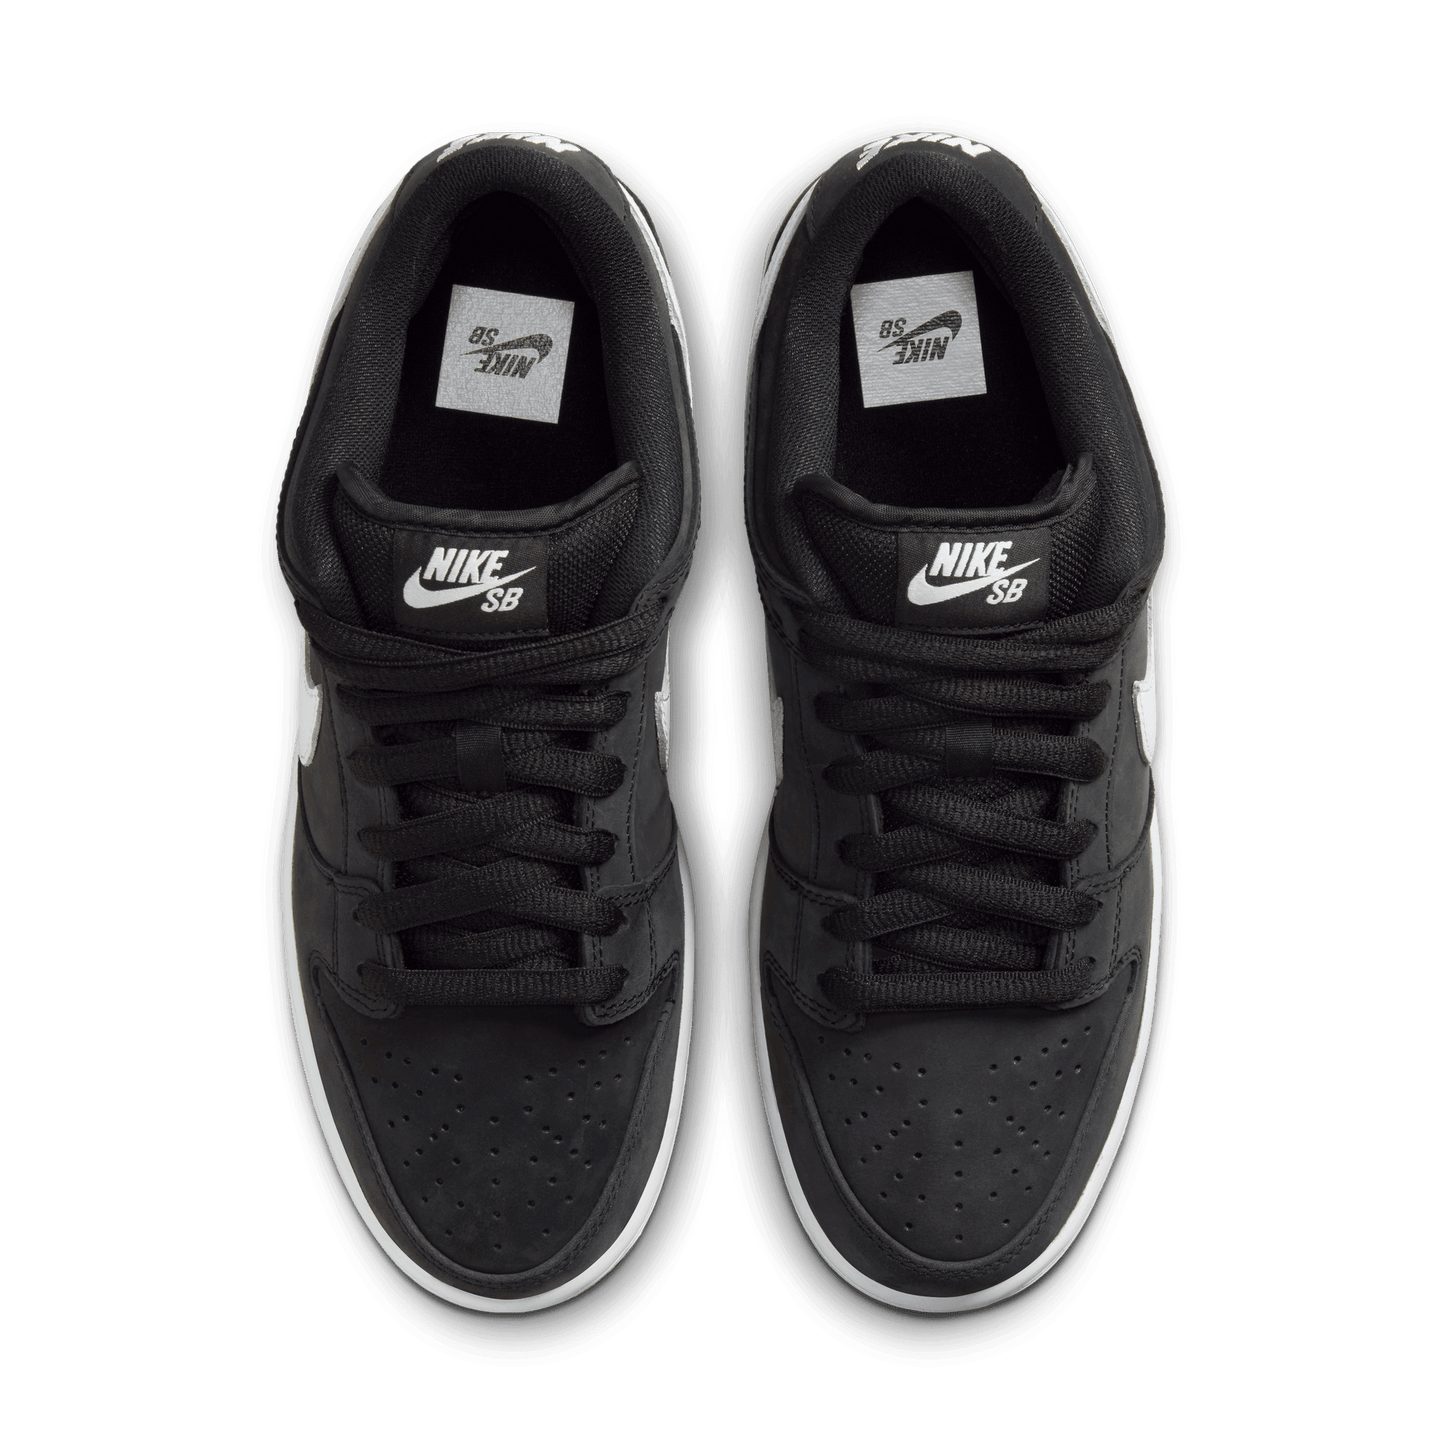 Nike SB Dunk Low Pro ISO black white black gum light brown